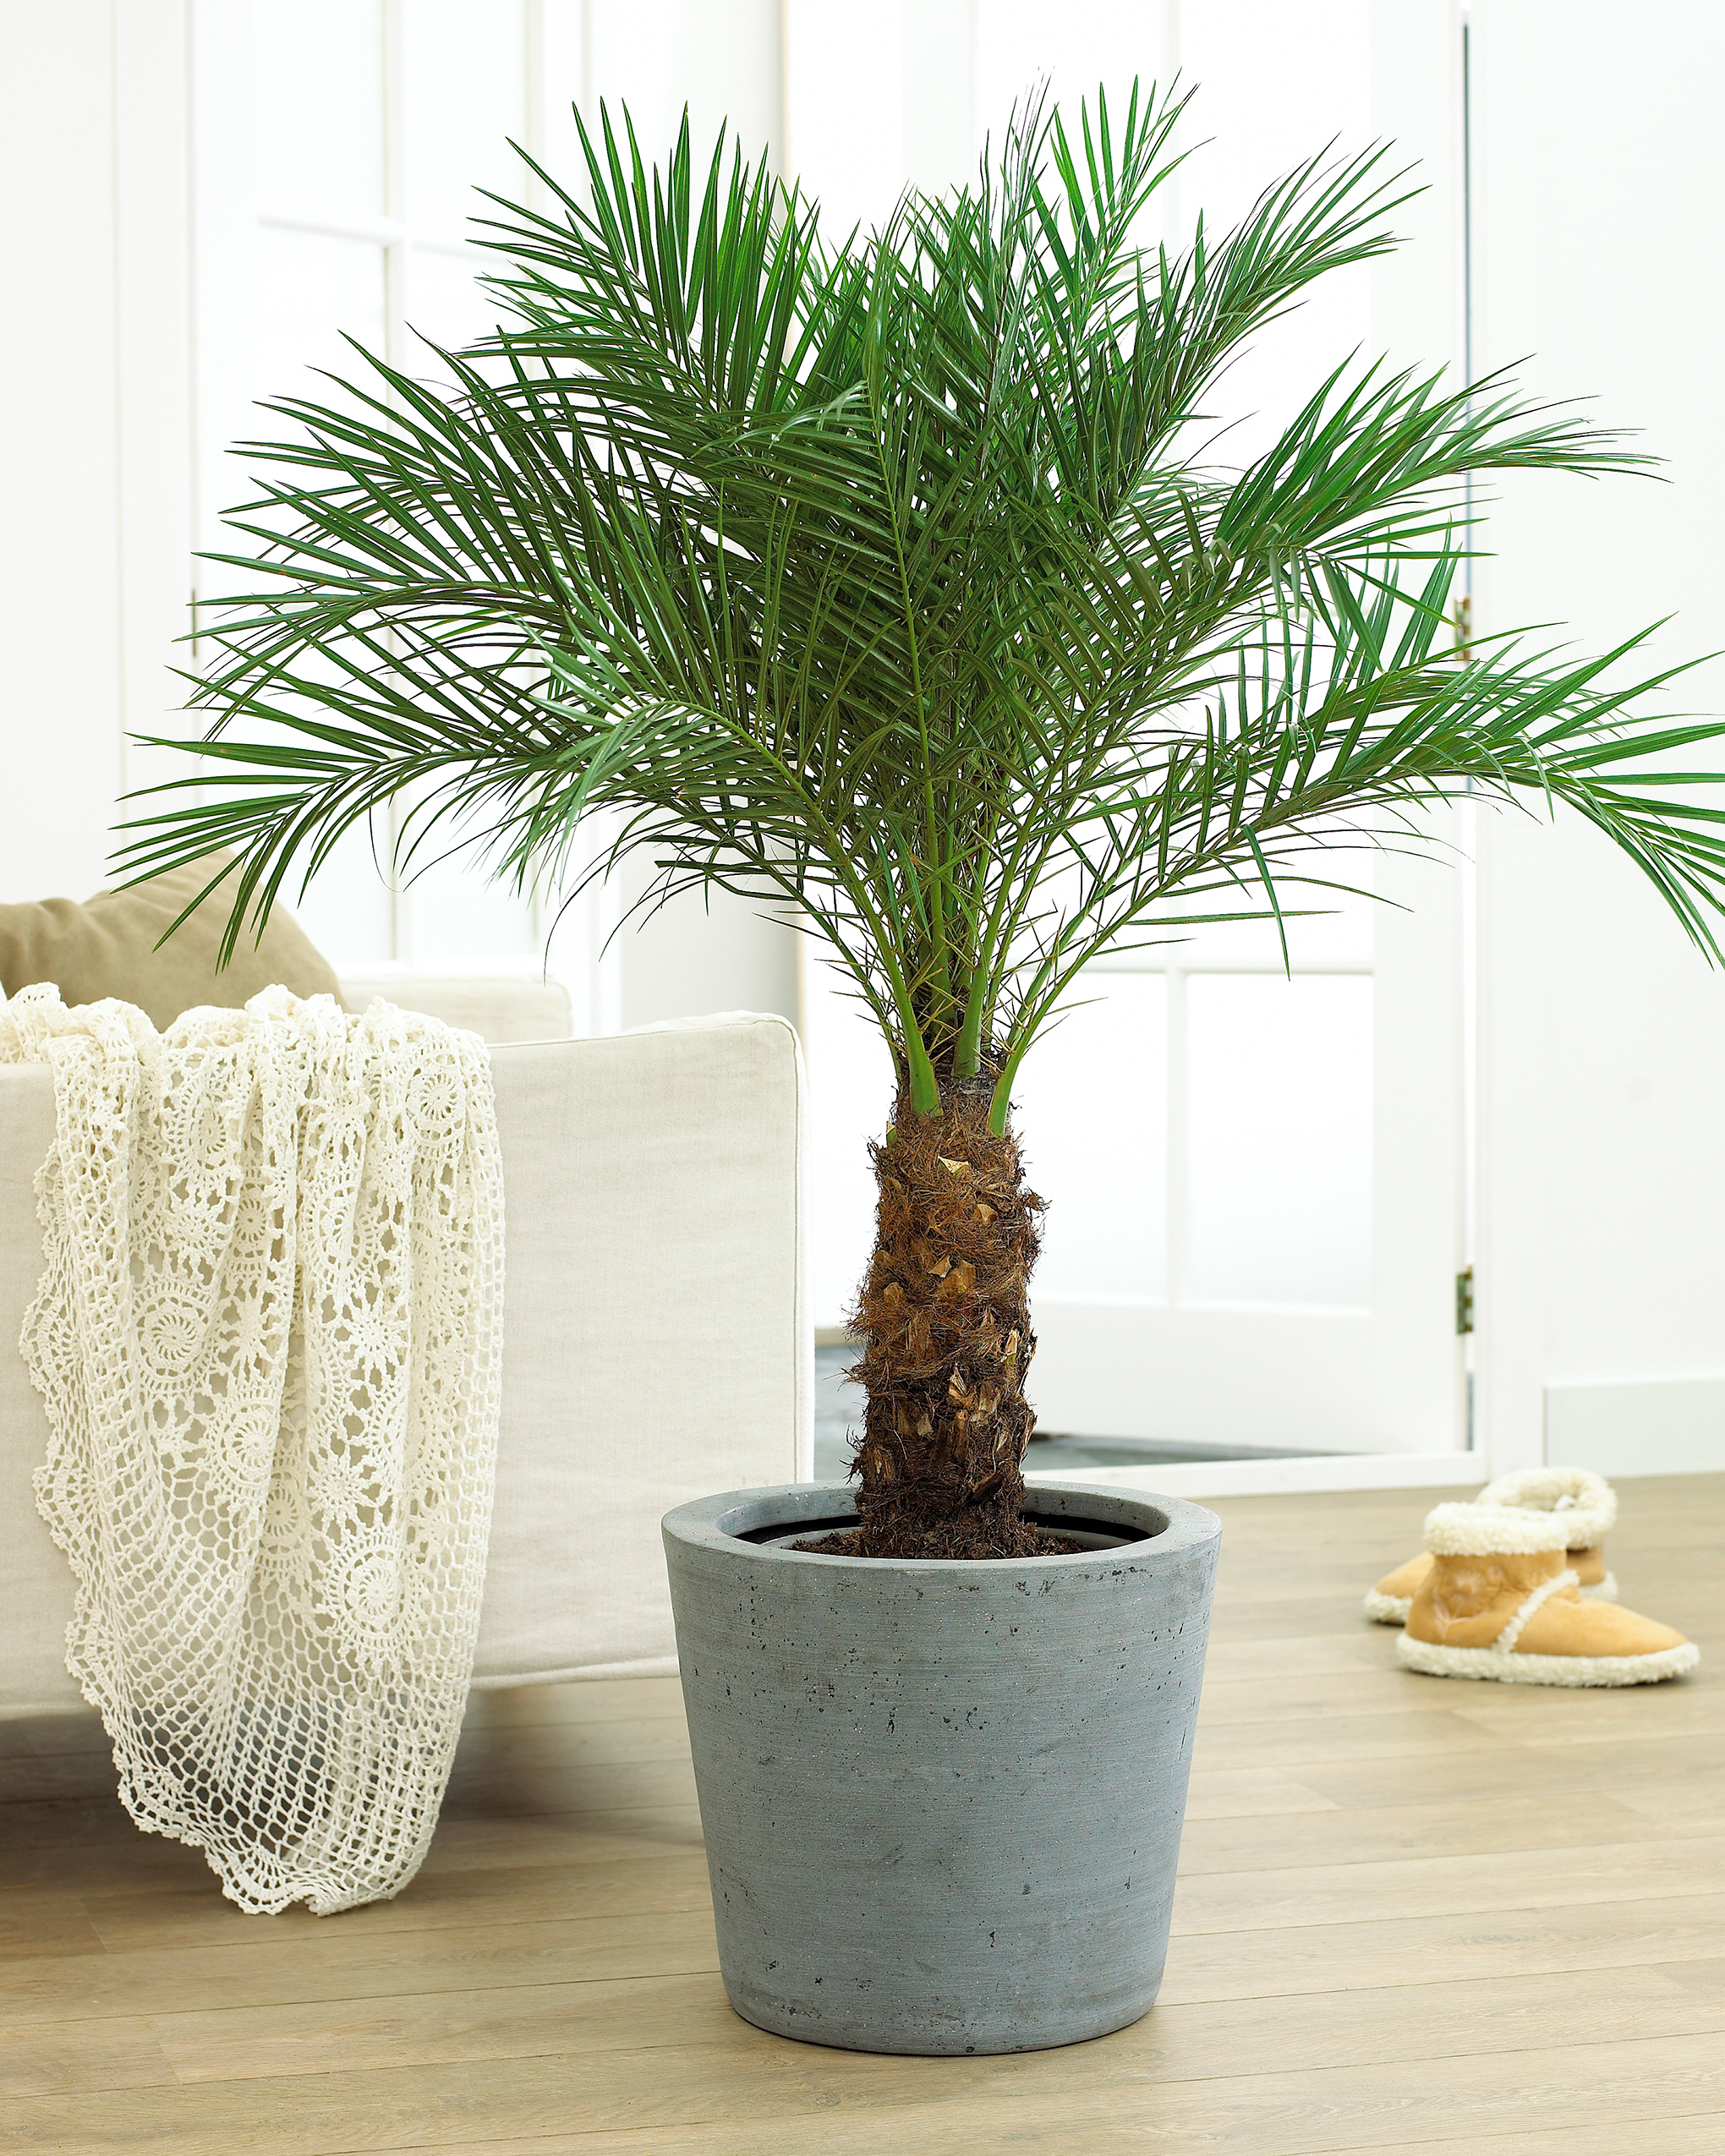 Planting palm tree indoors